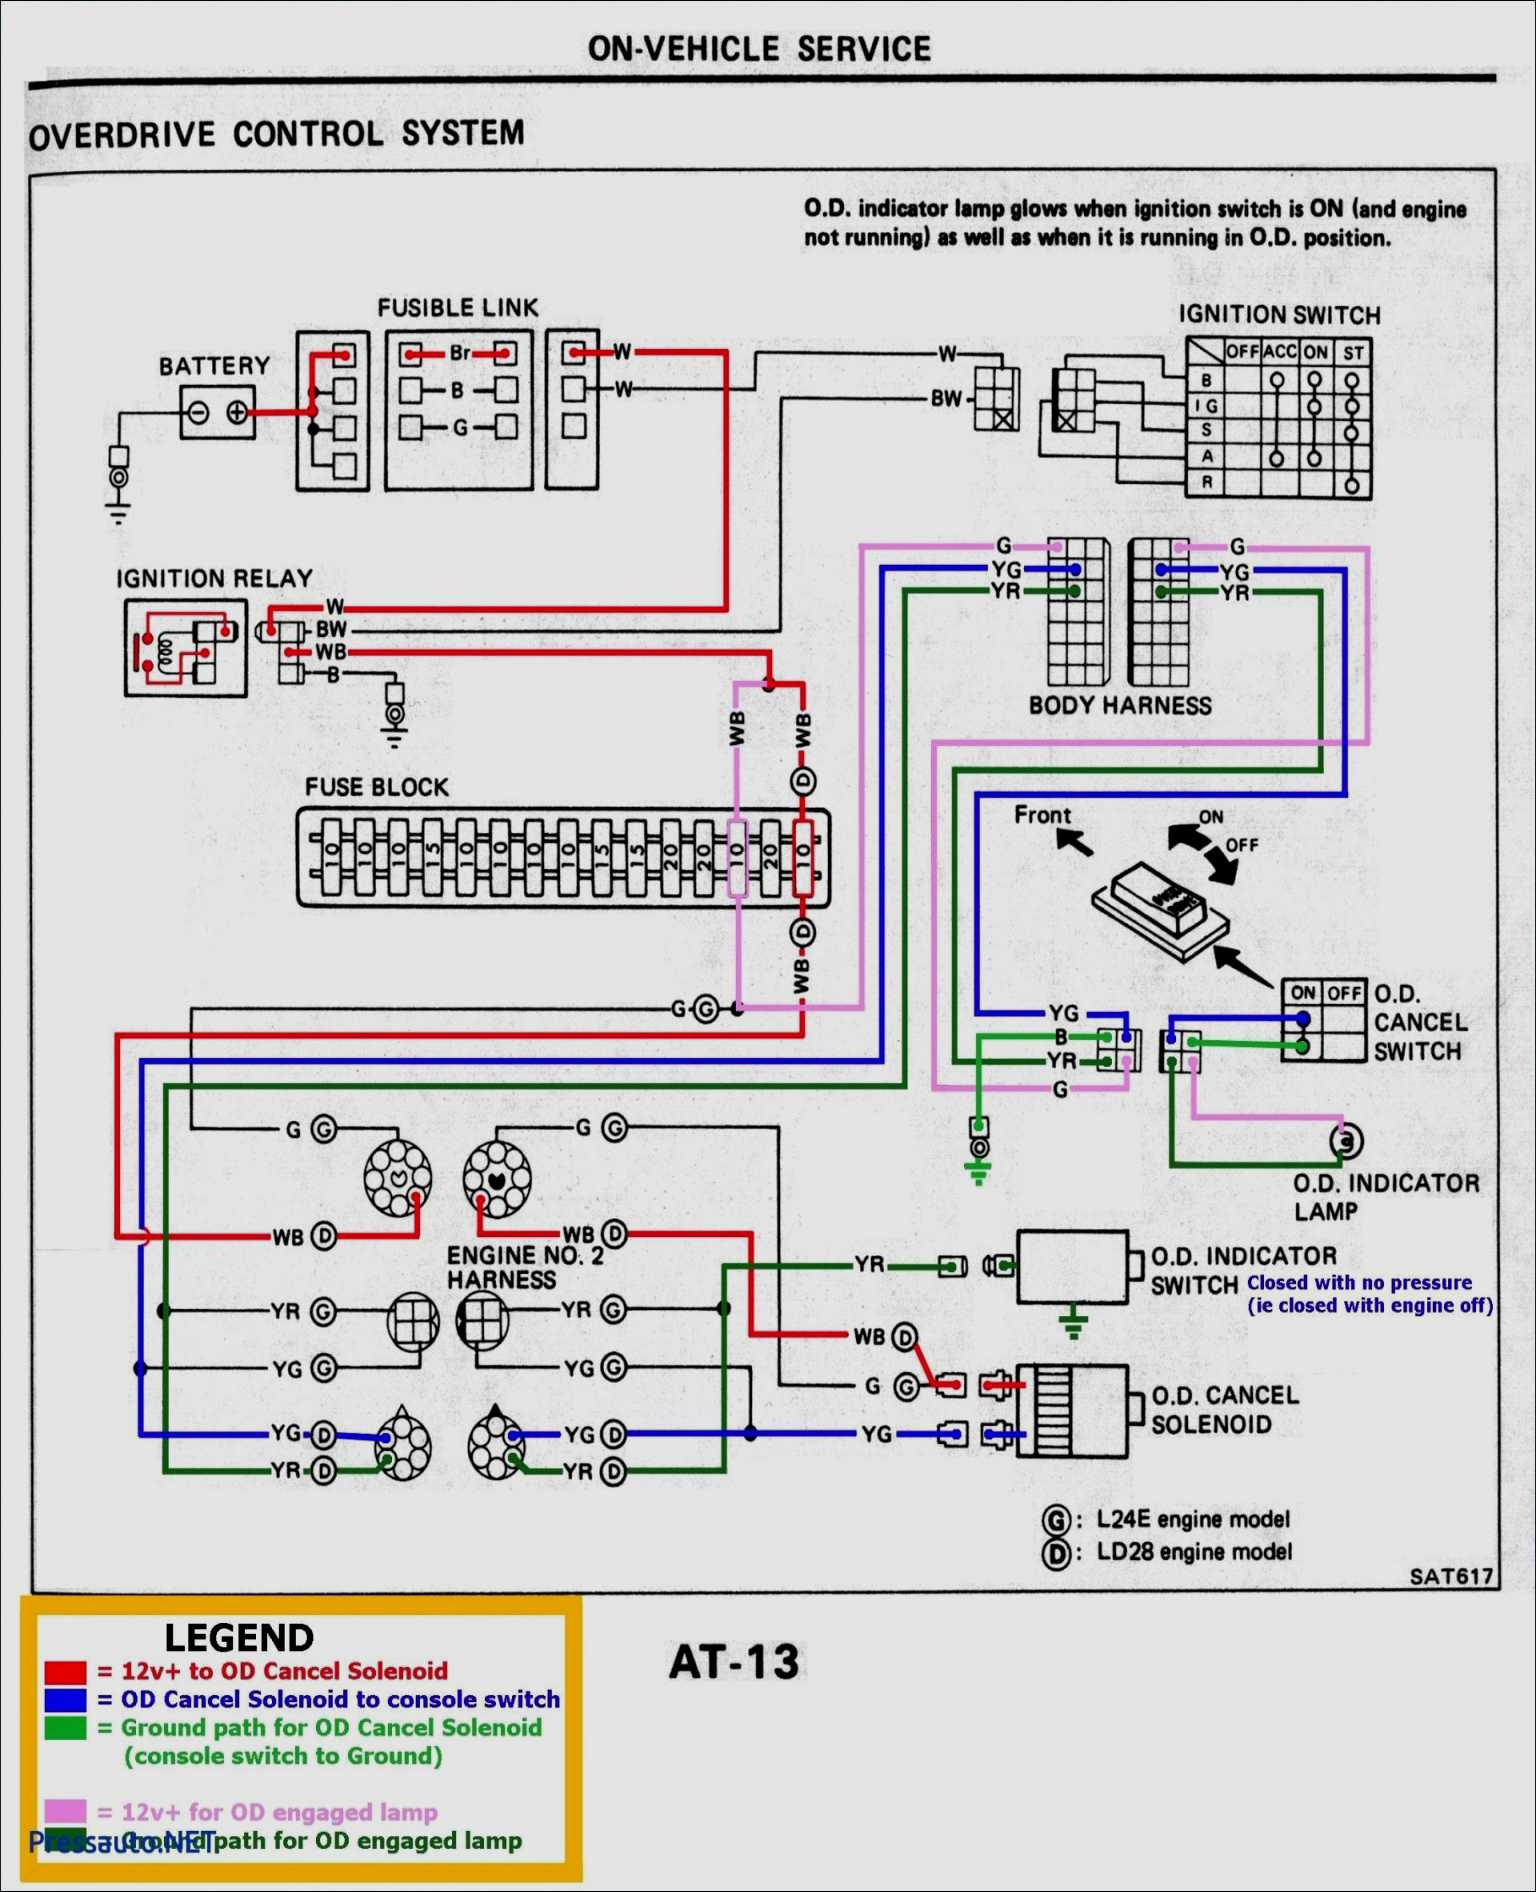 Battery Isolator Wiring Diagram Sp | Wiring Diagram - Dual Battery Isolator Wiring Diagram